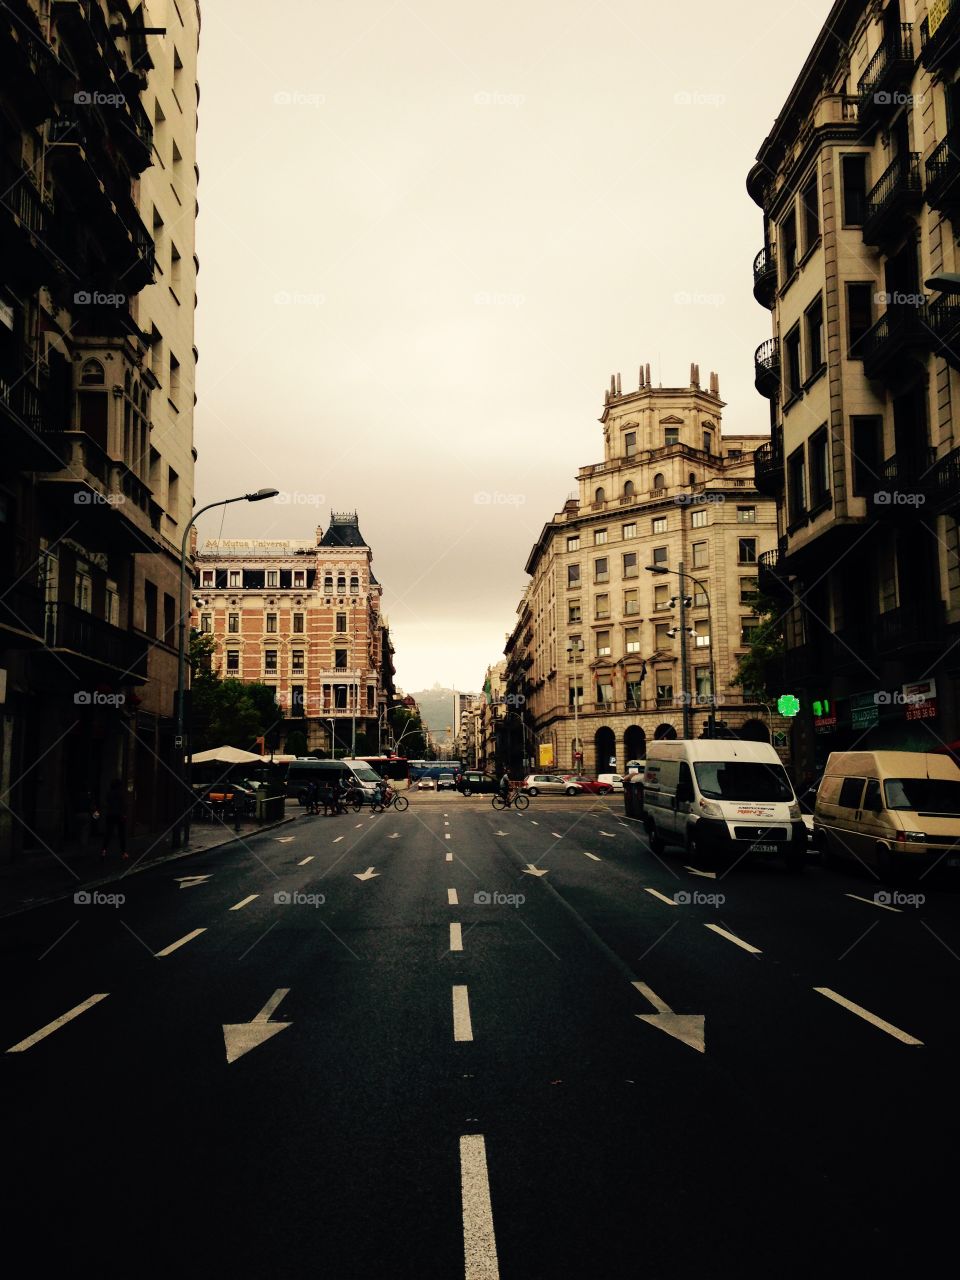 Barcelona Street View